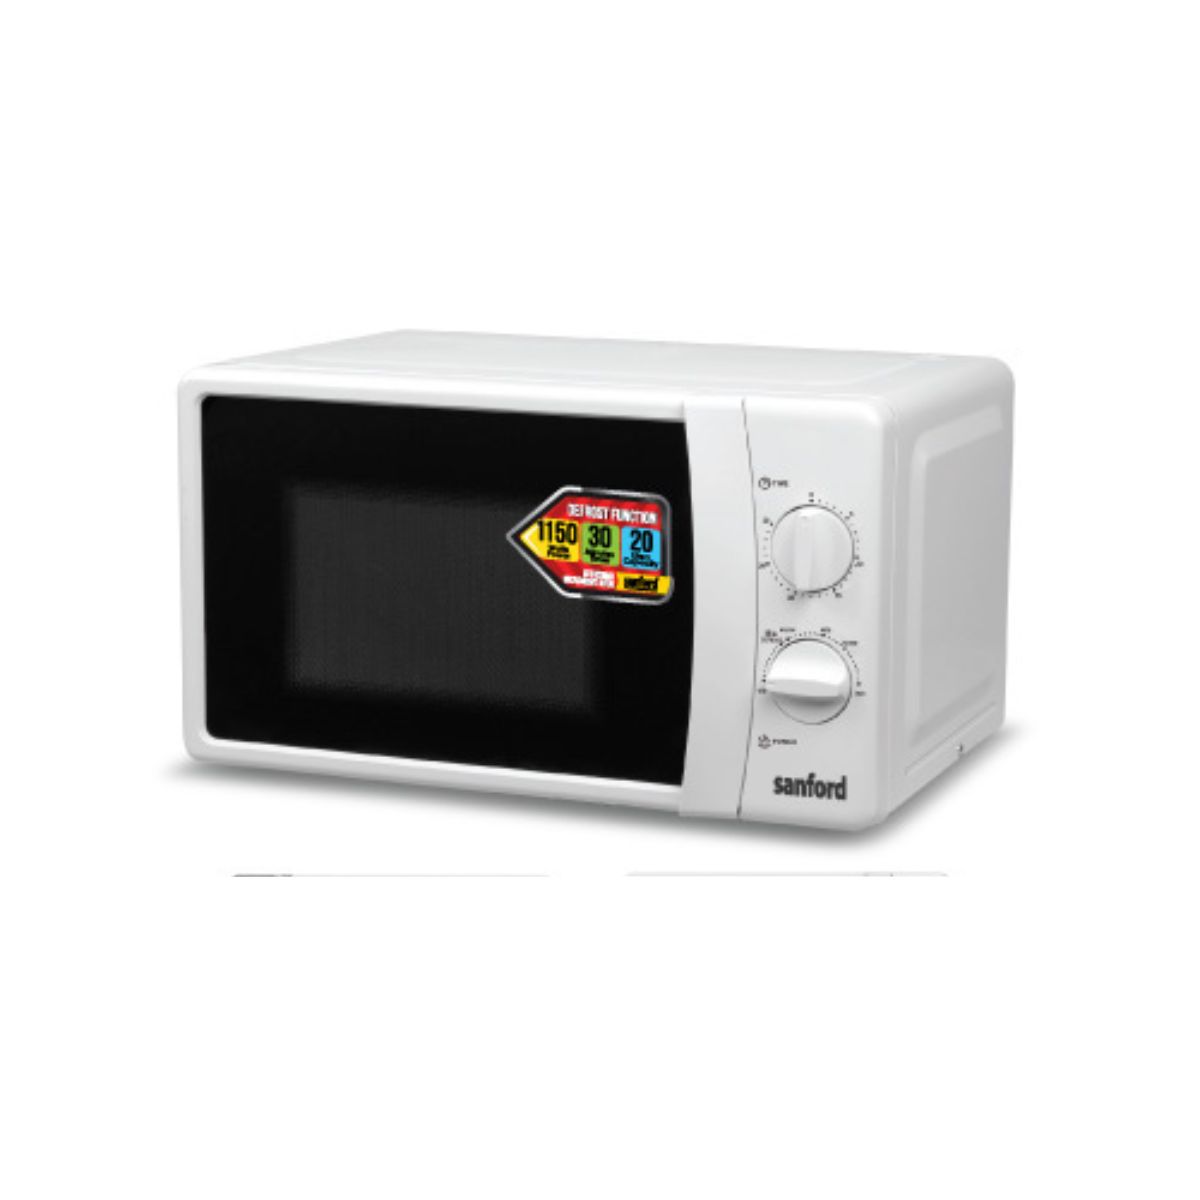 Sanford Microwave Oven - SF5629MO - 20L - White